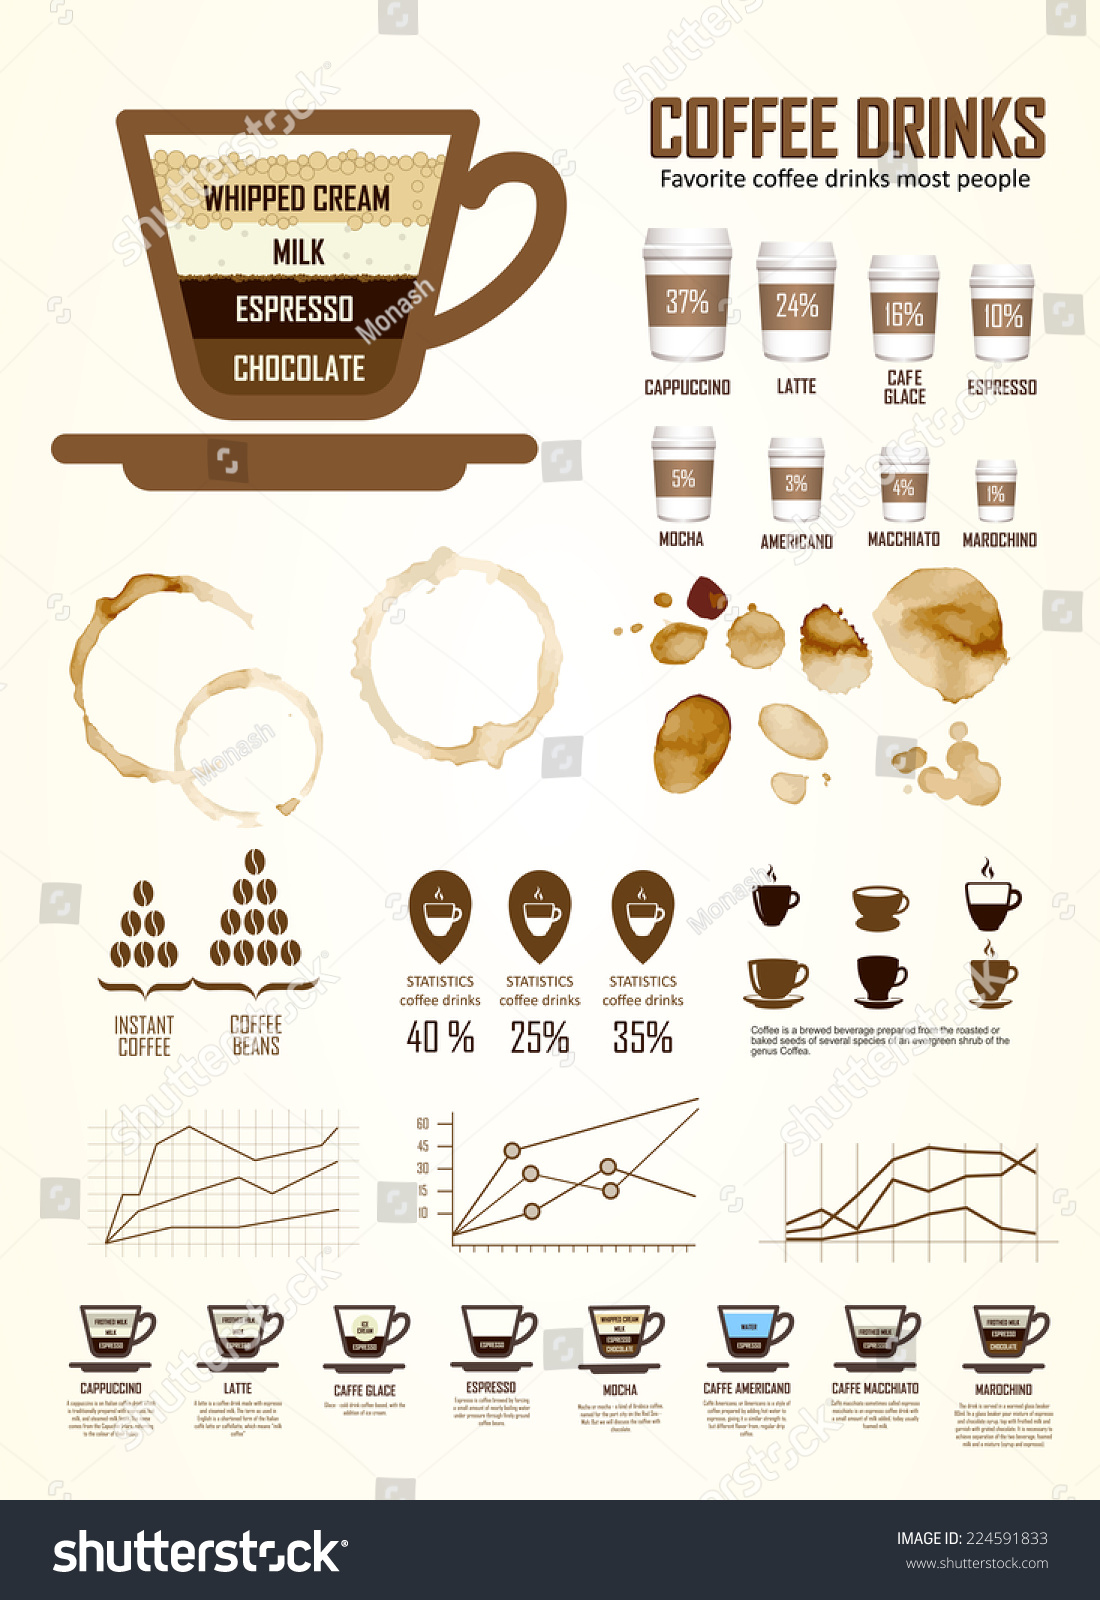 coffee statistics